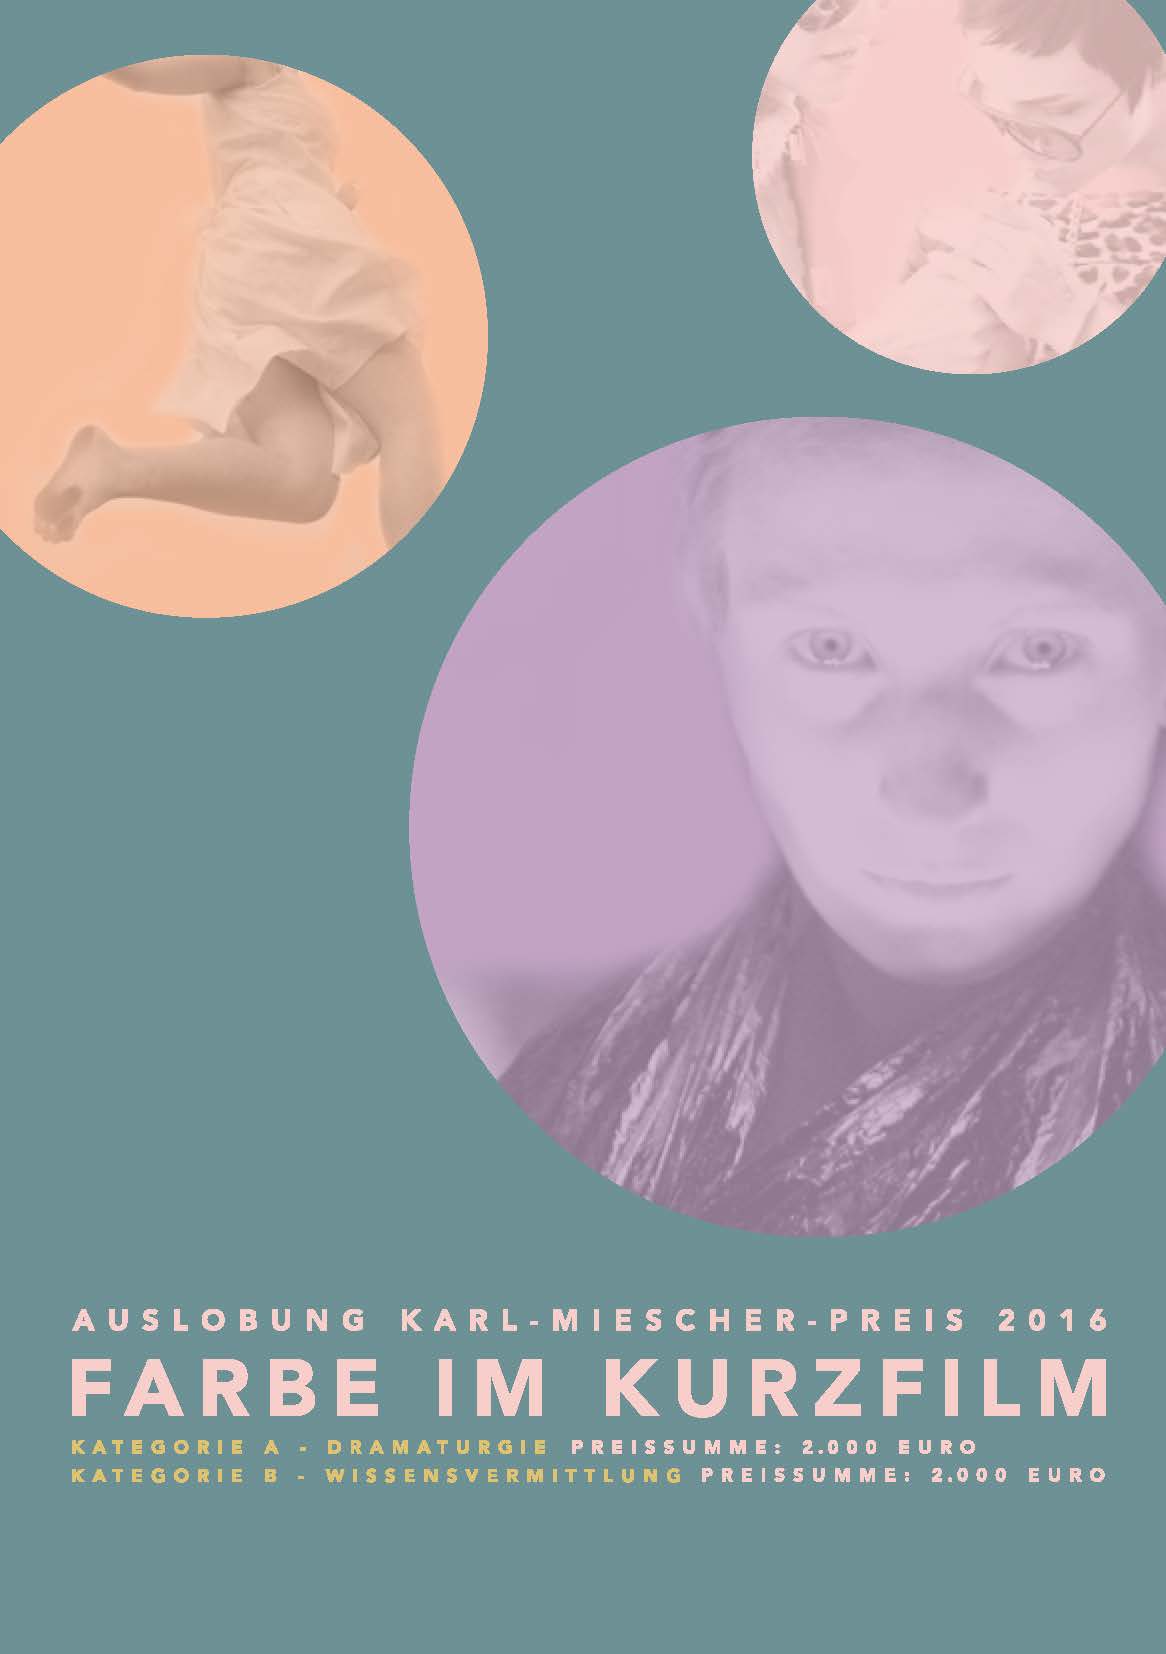 Farbe im Kurzfilm Auslobung Karl-Miescher-Preis